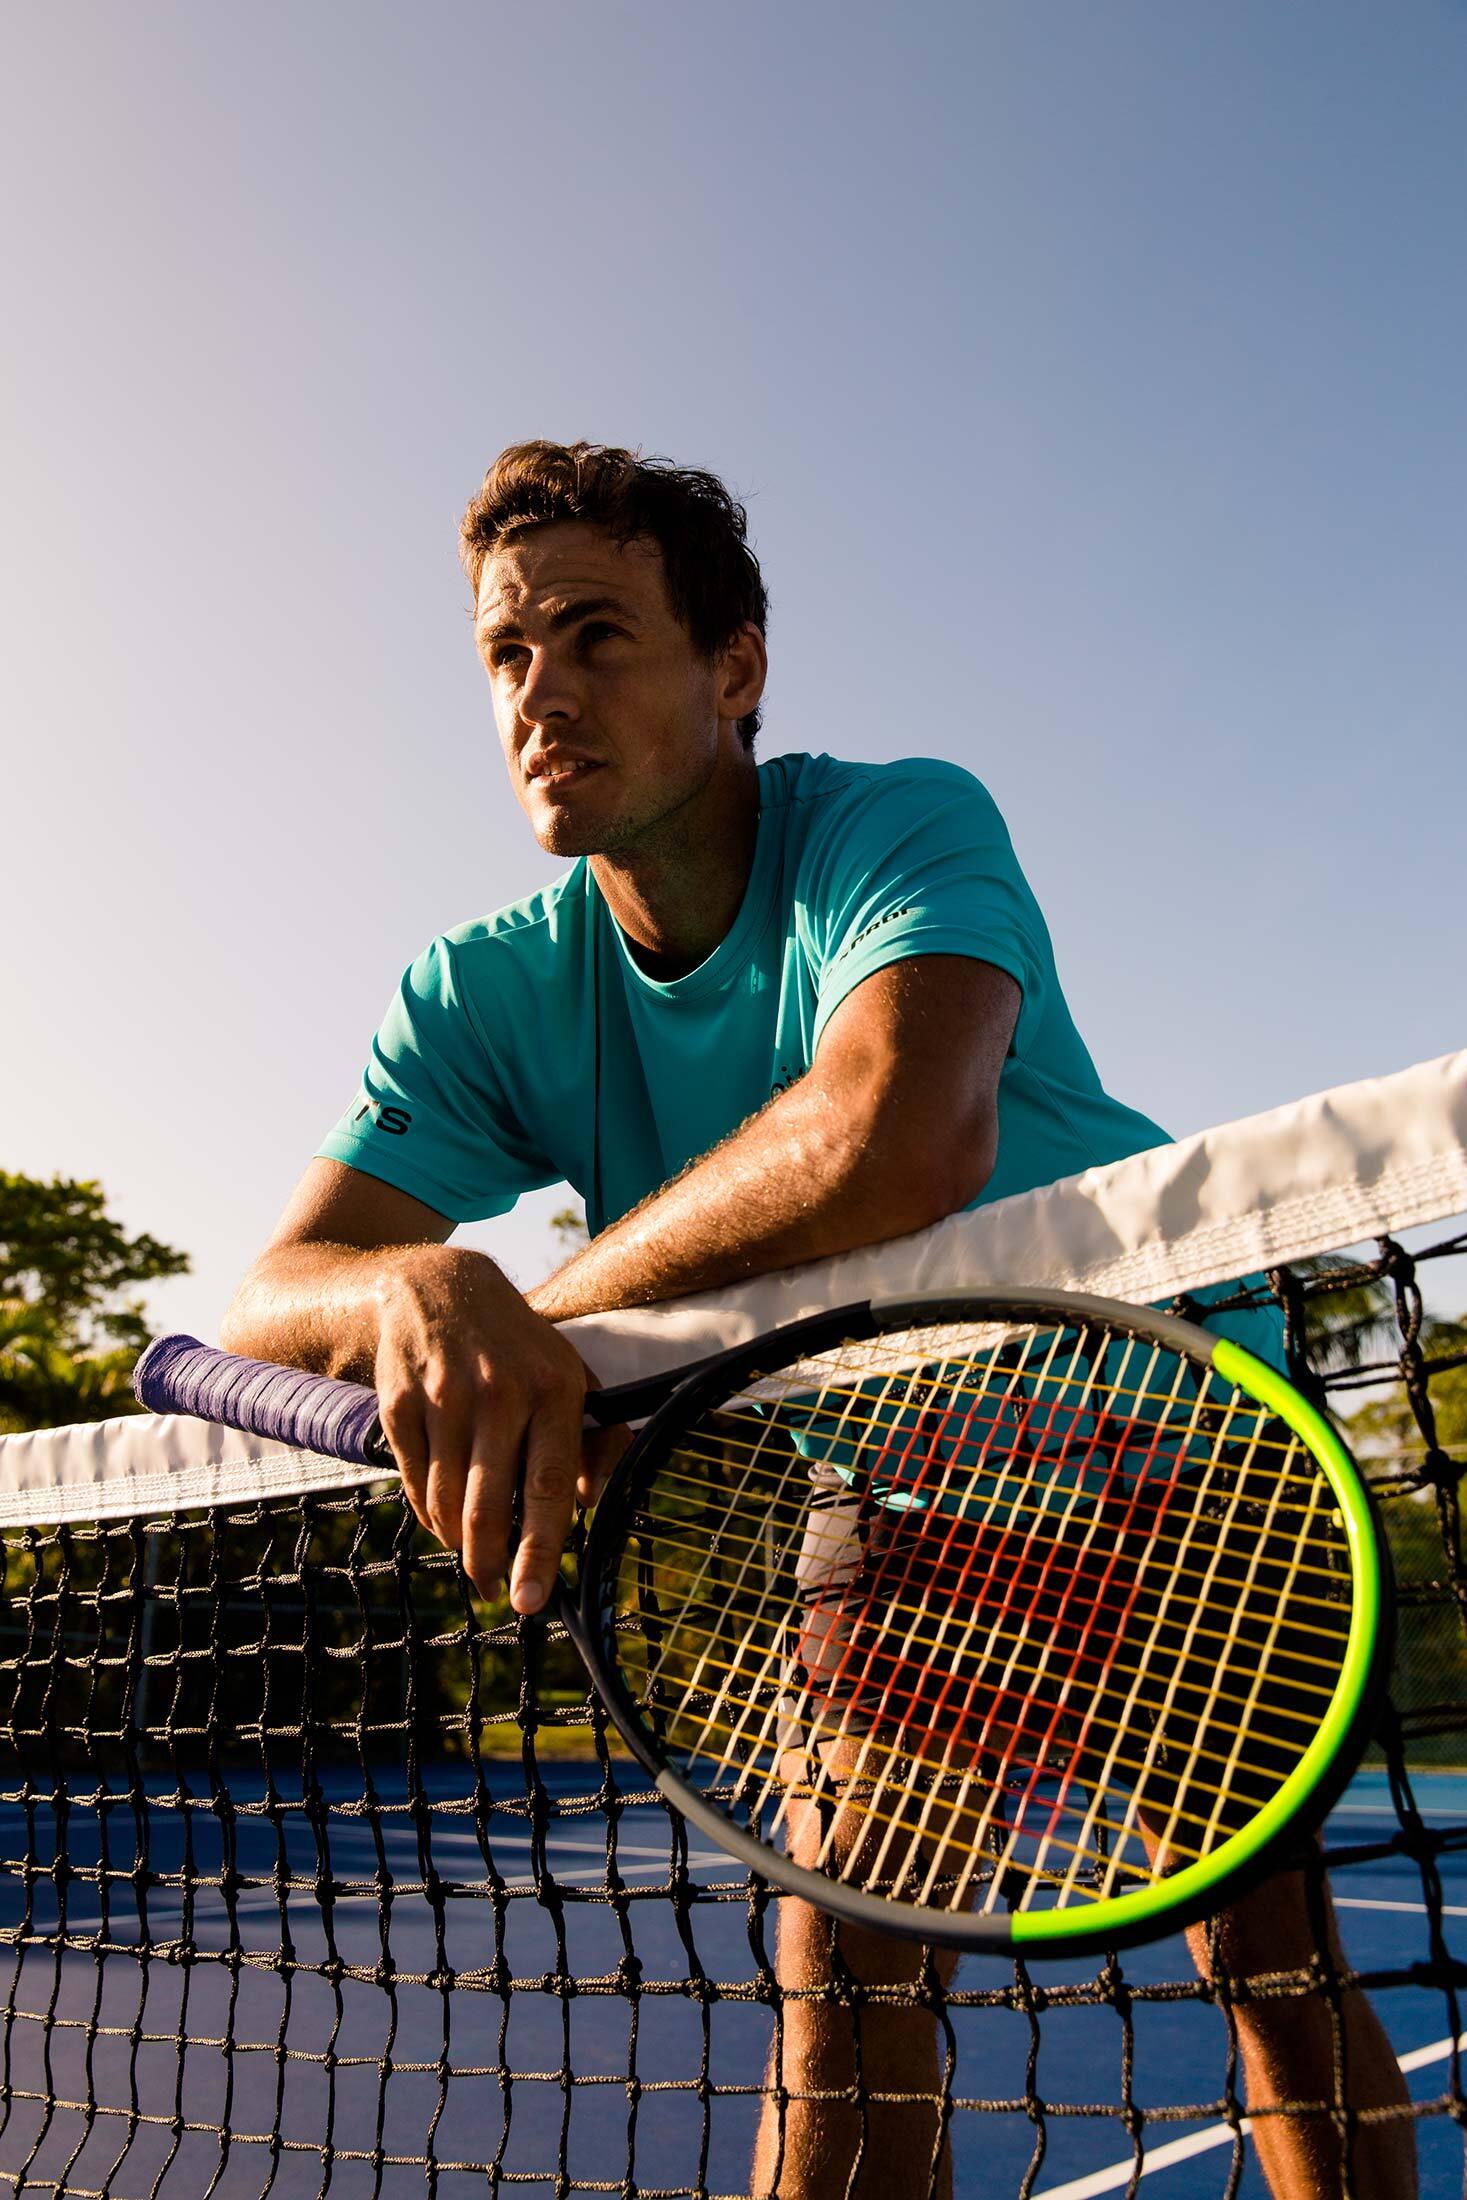 Novak Djokovic, Other Tennis Players Seek to Reform Economics of the Sport 